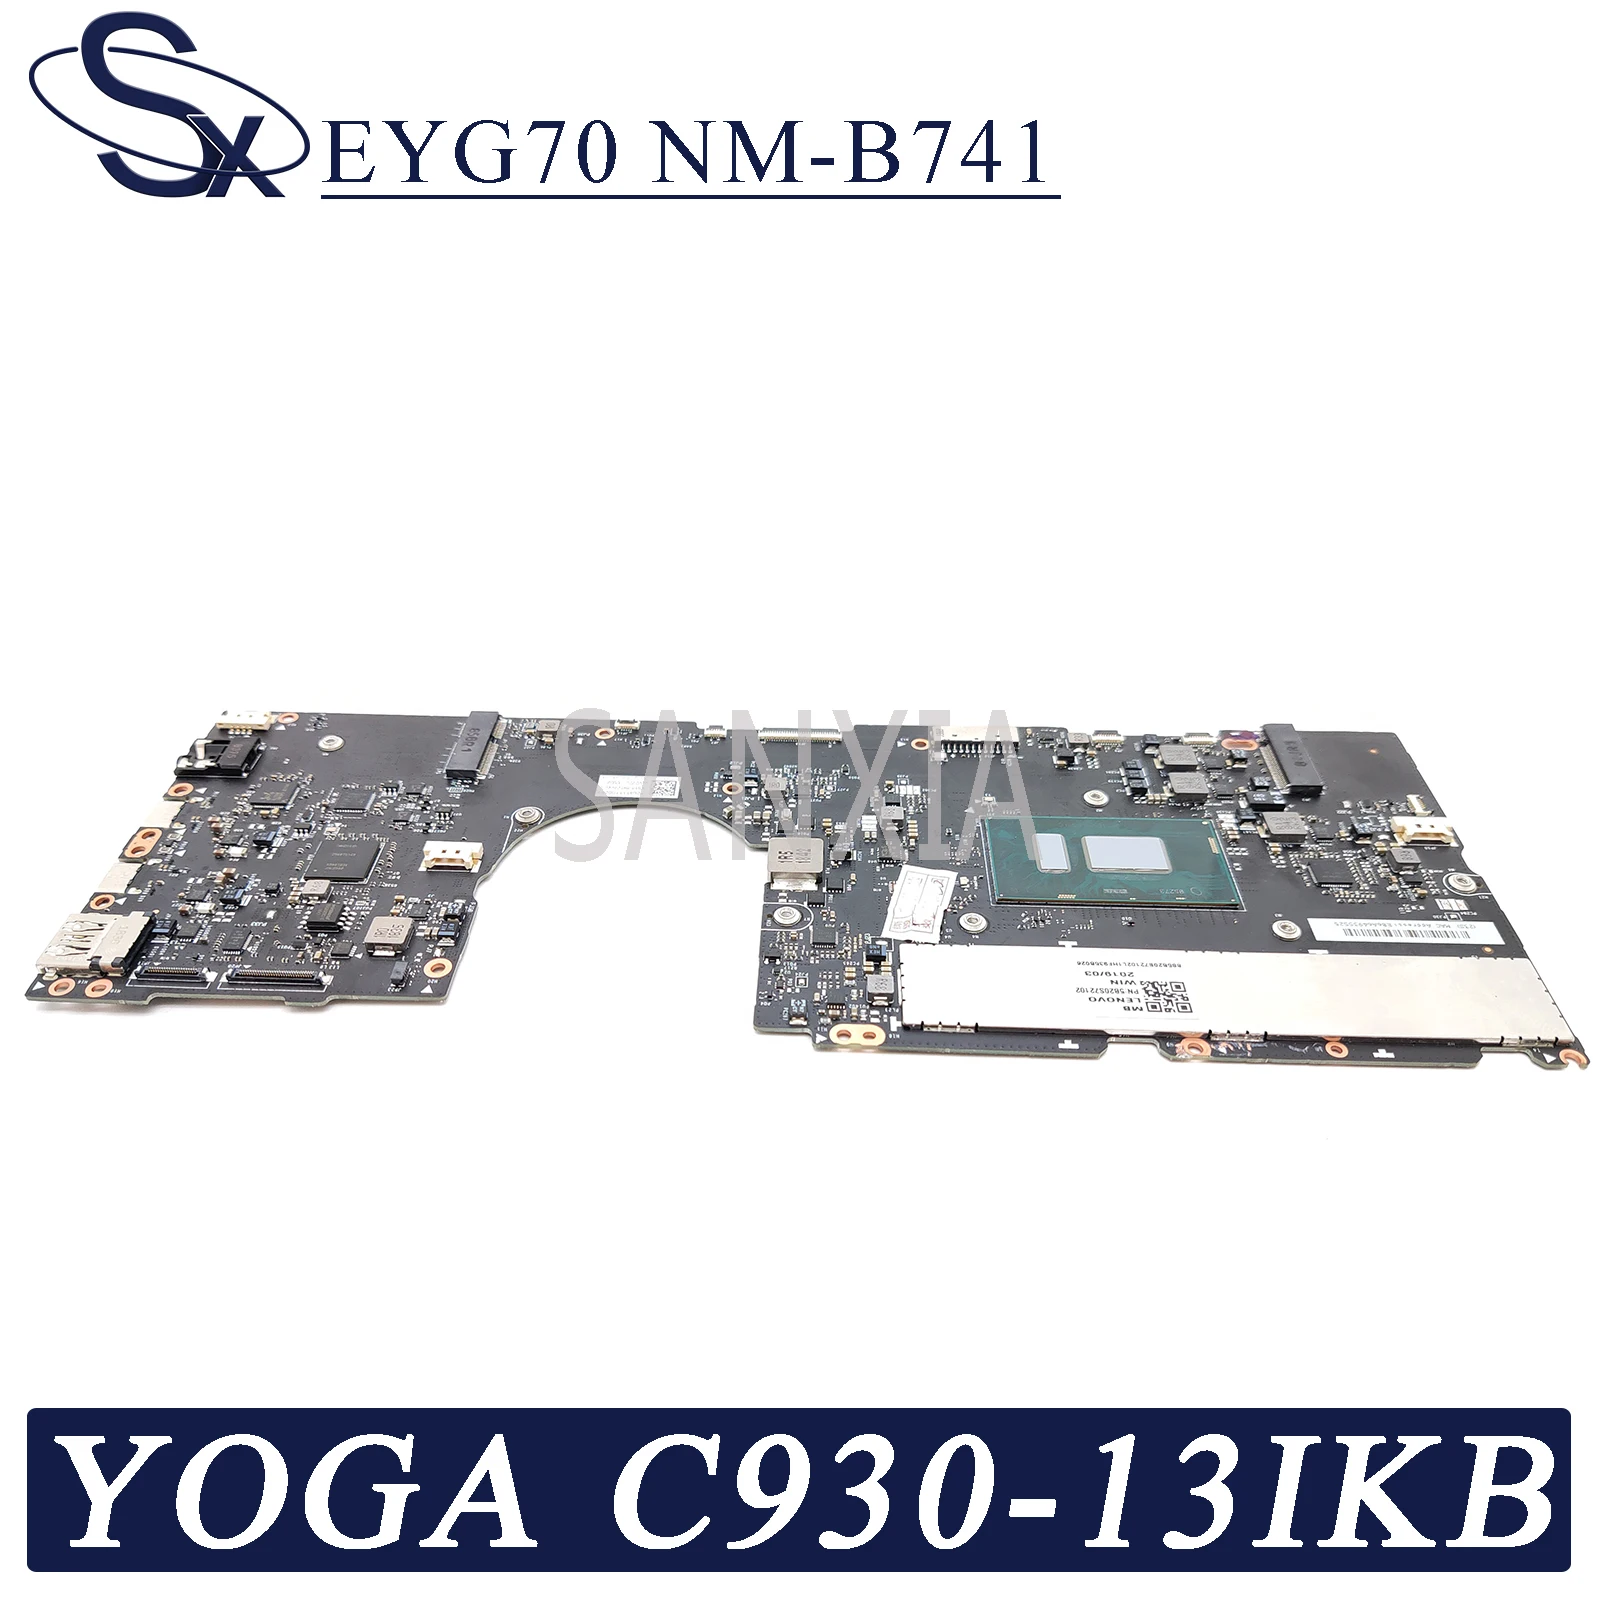 kefu eyg70 nm b741 laptop motherboard for lenovo yoga c930 13ikb original mainboard 8gb ram i5 8250u cpu free global shipping